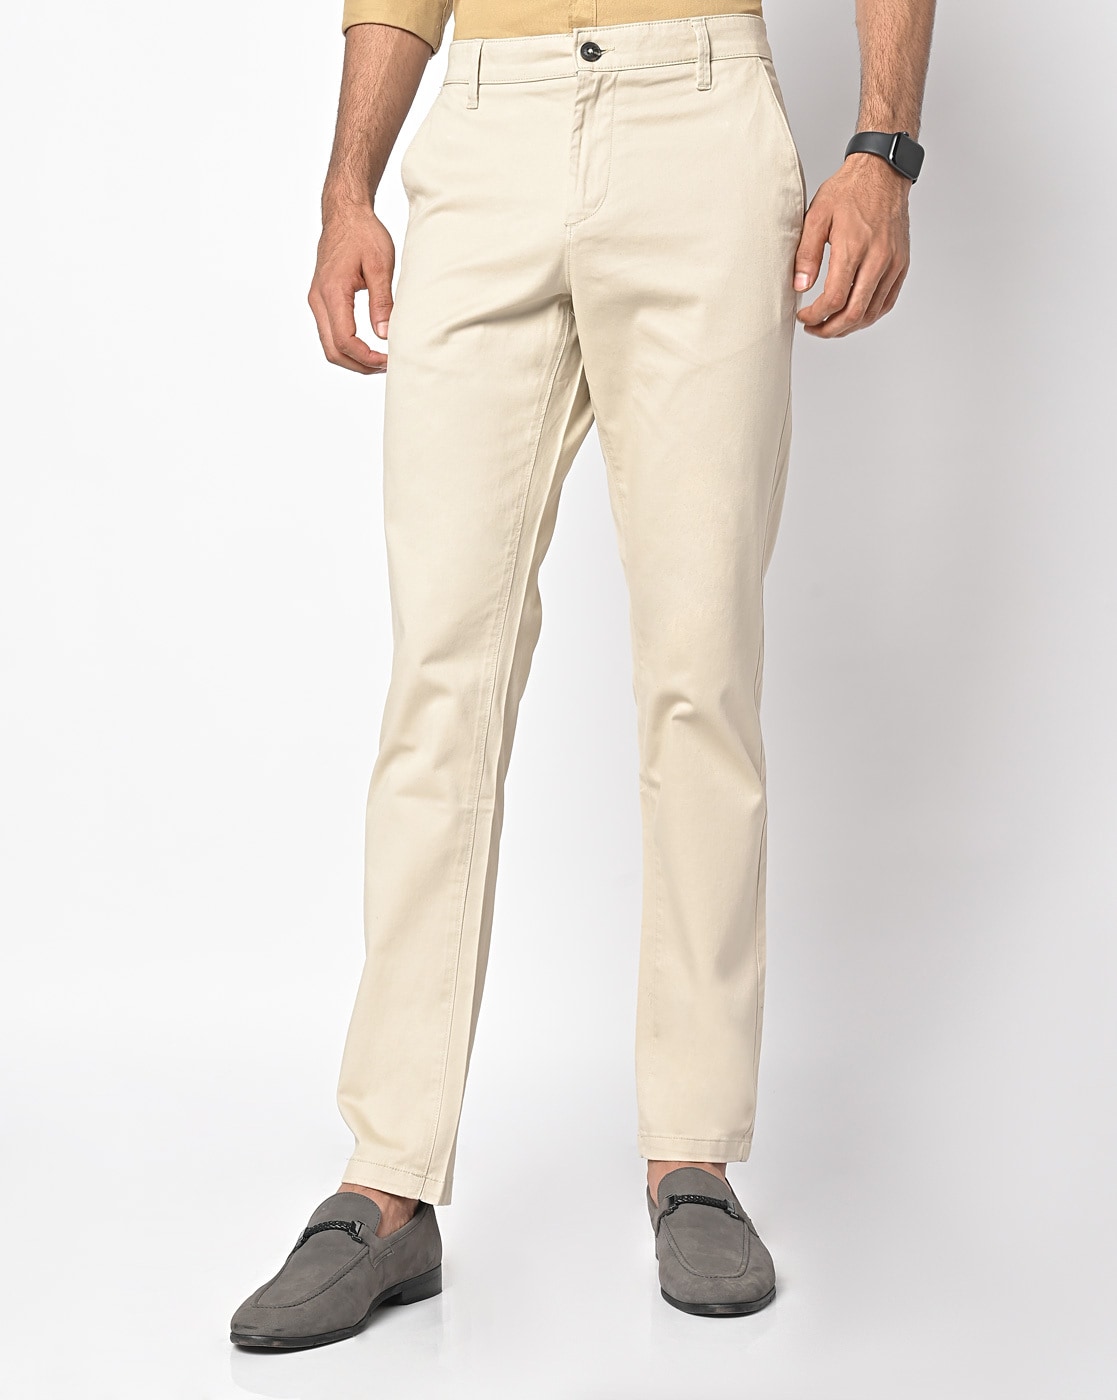 Cotton Cream Color Trouser Formal Wear Flat Trousers